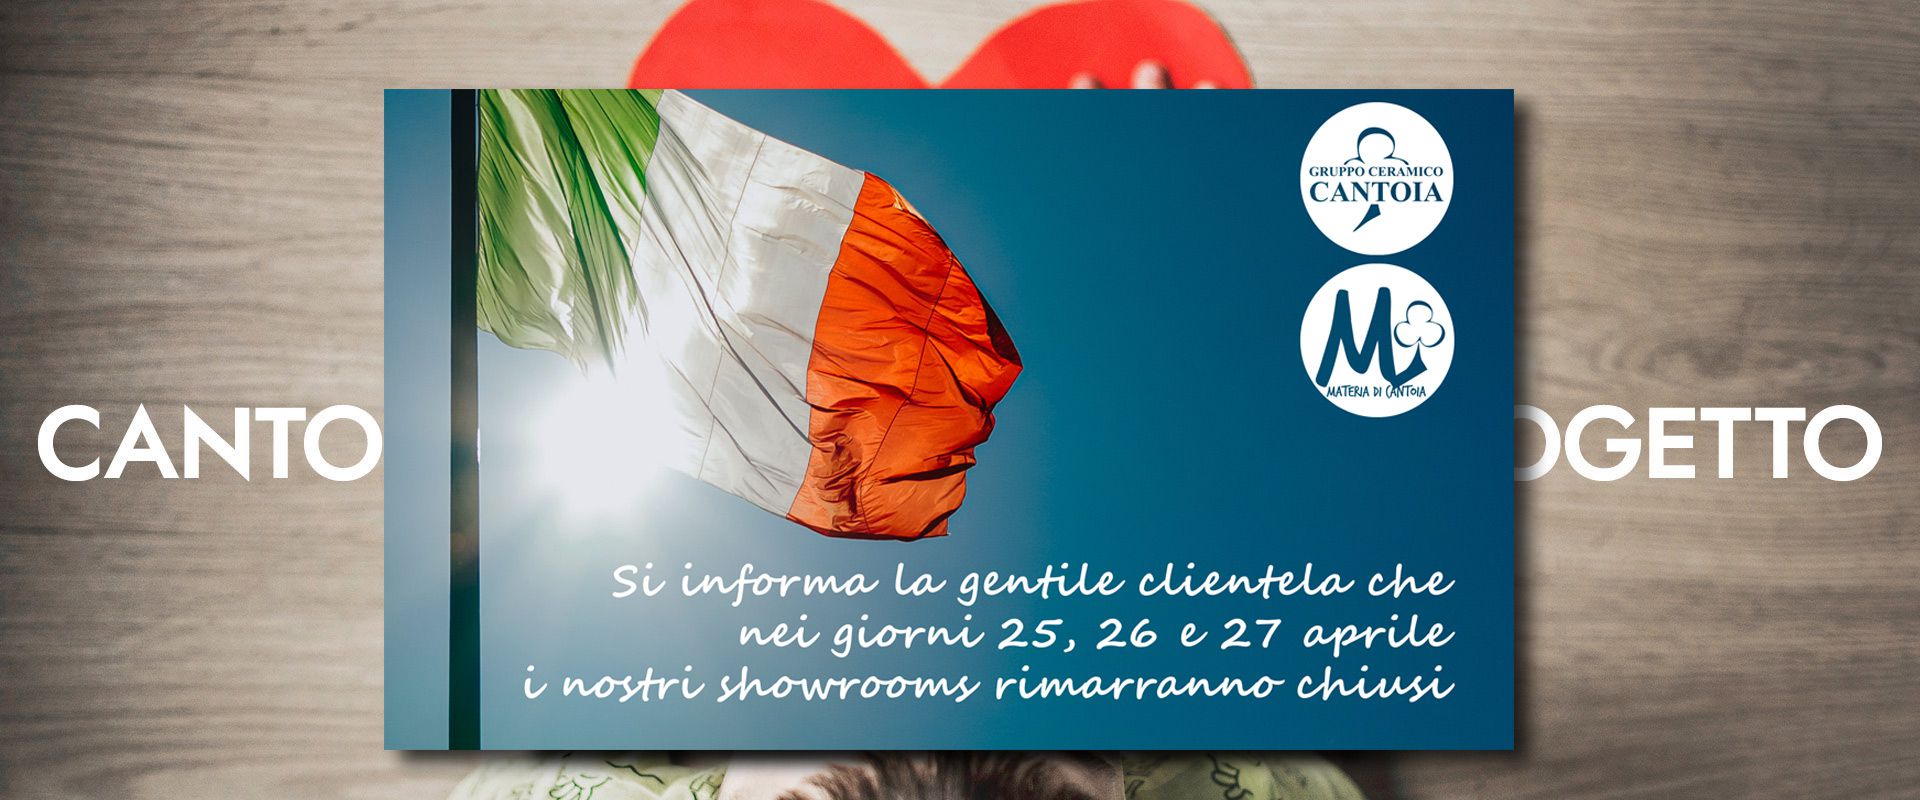 Gruppo Ceramico Cantoia, Novara - homepage